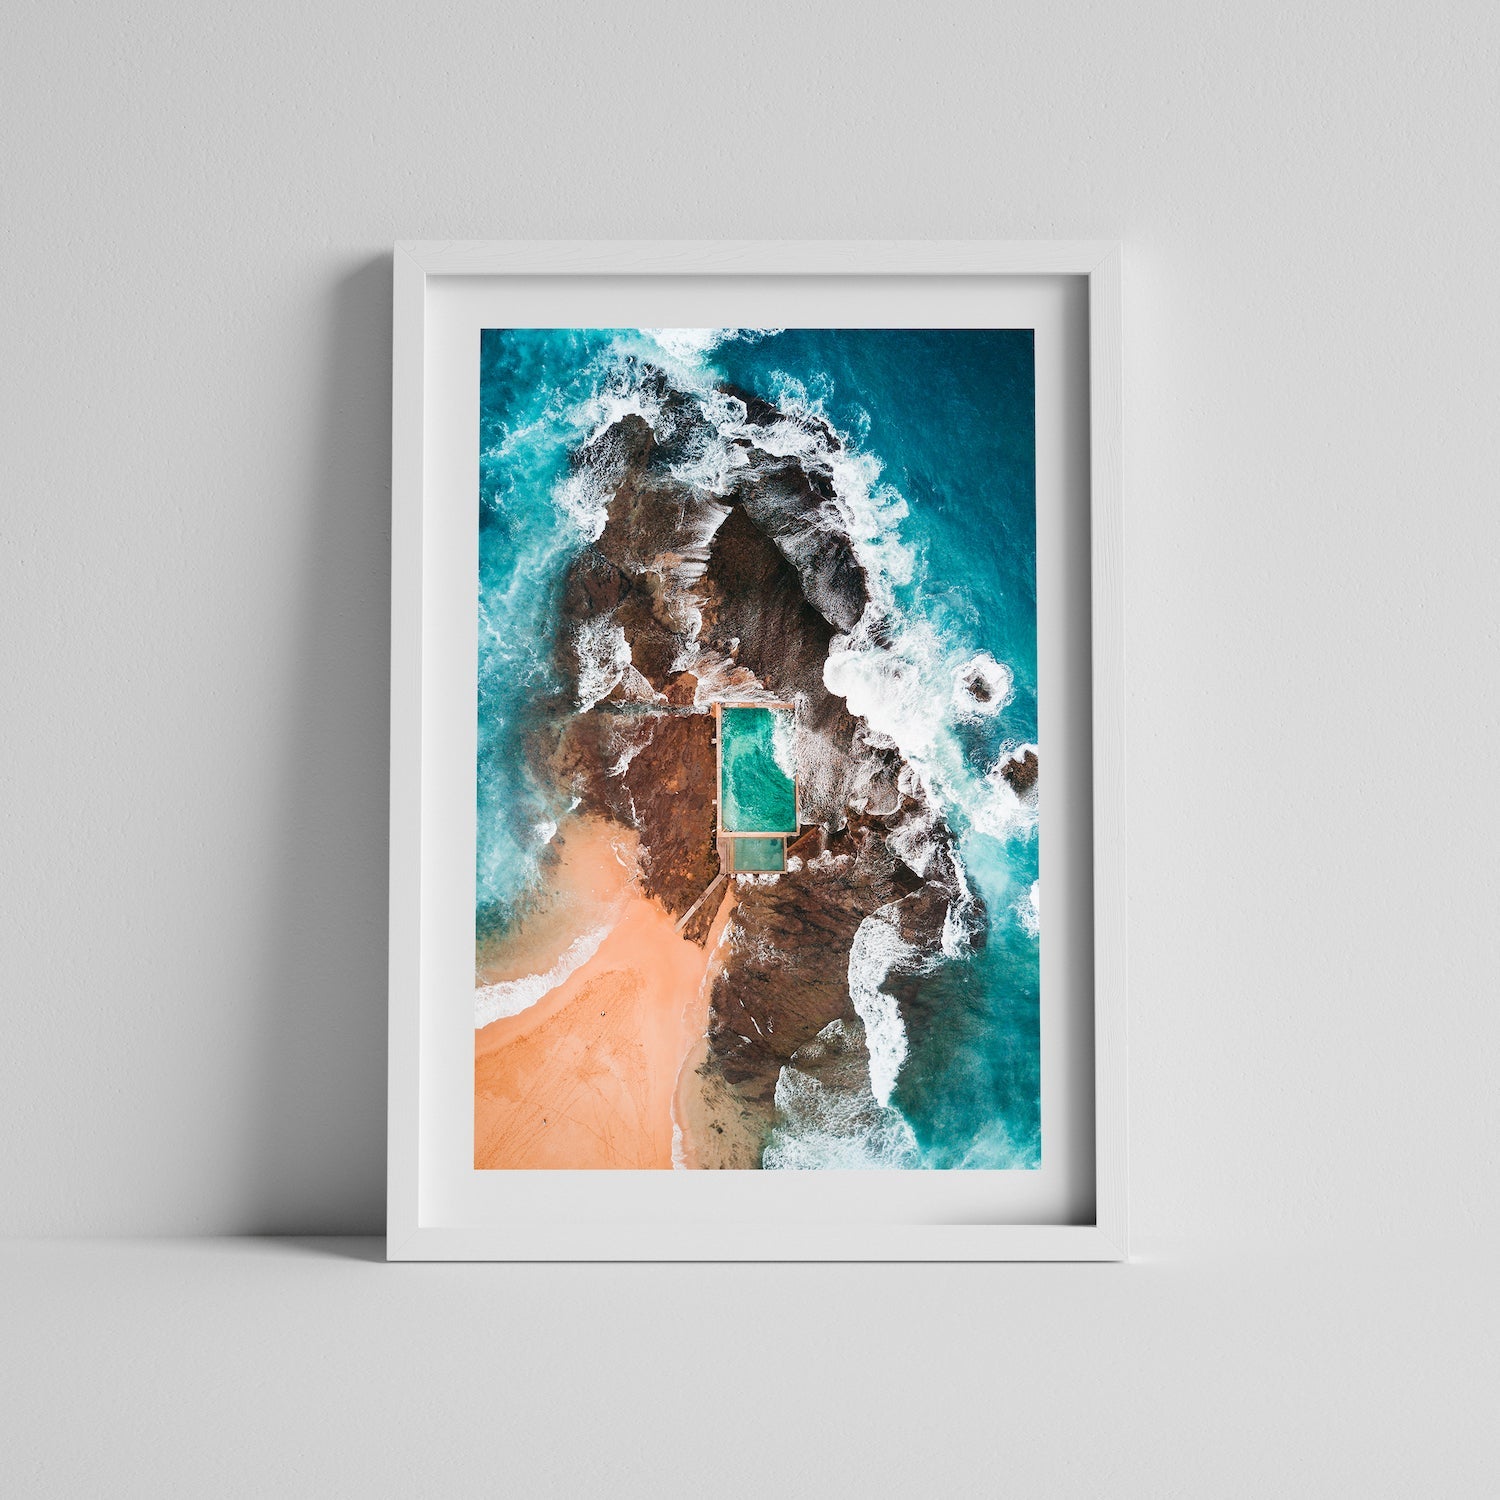 Mona Vale Premium Framed Print | Limited Production - Peter Yan Studio